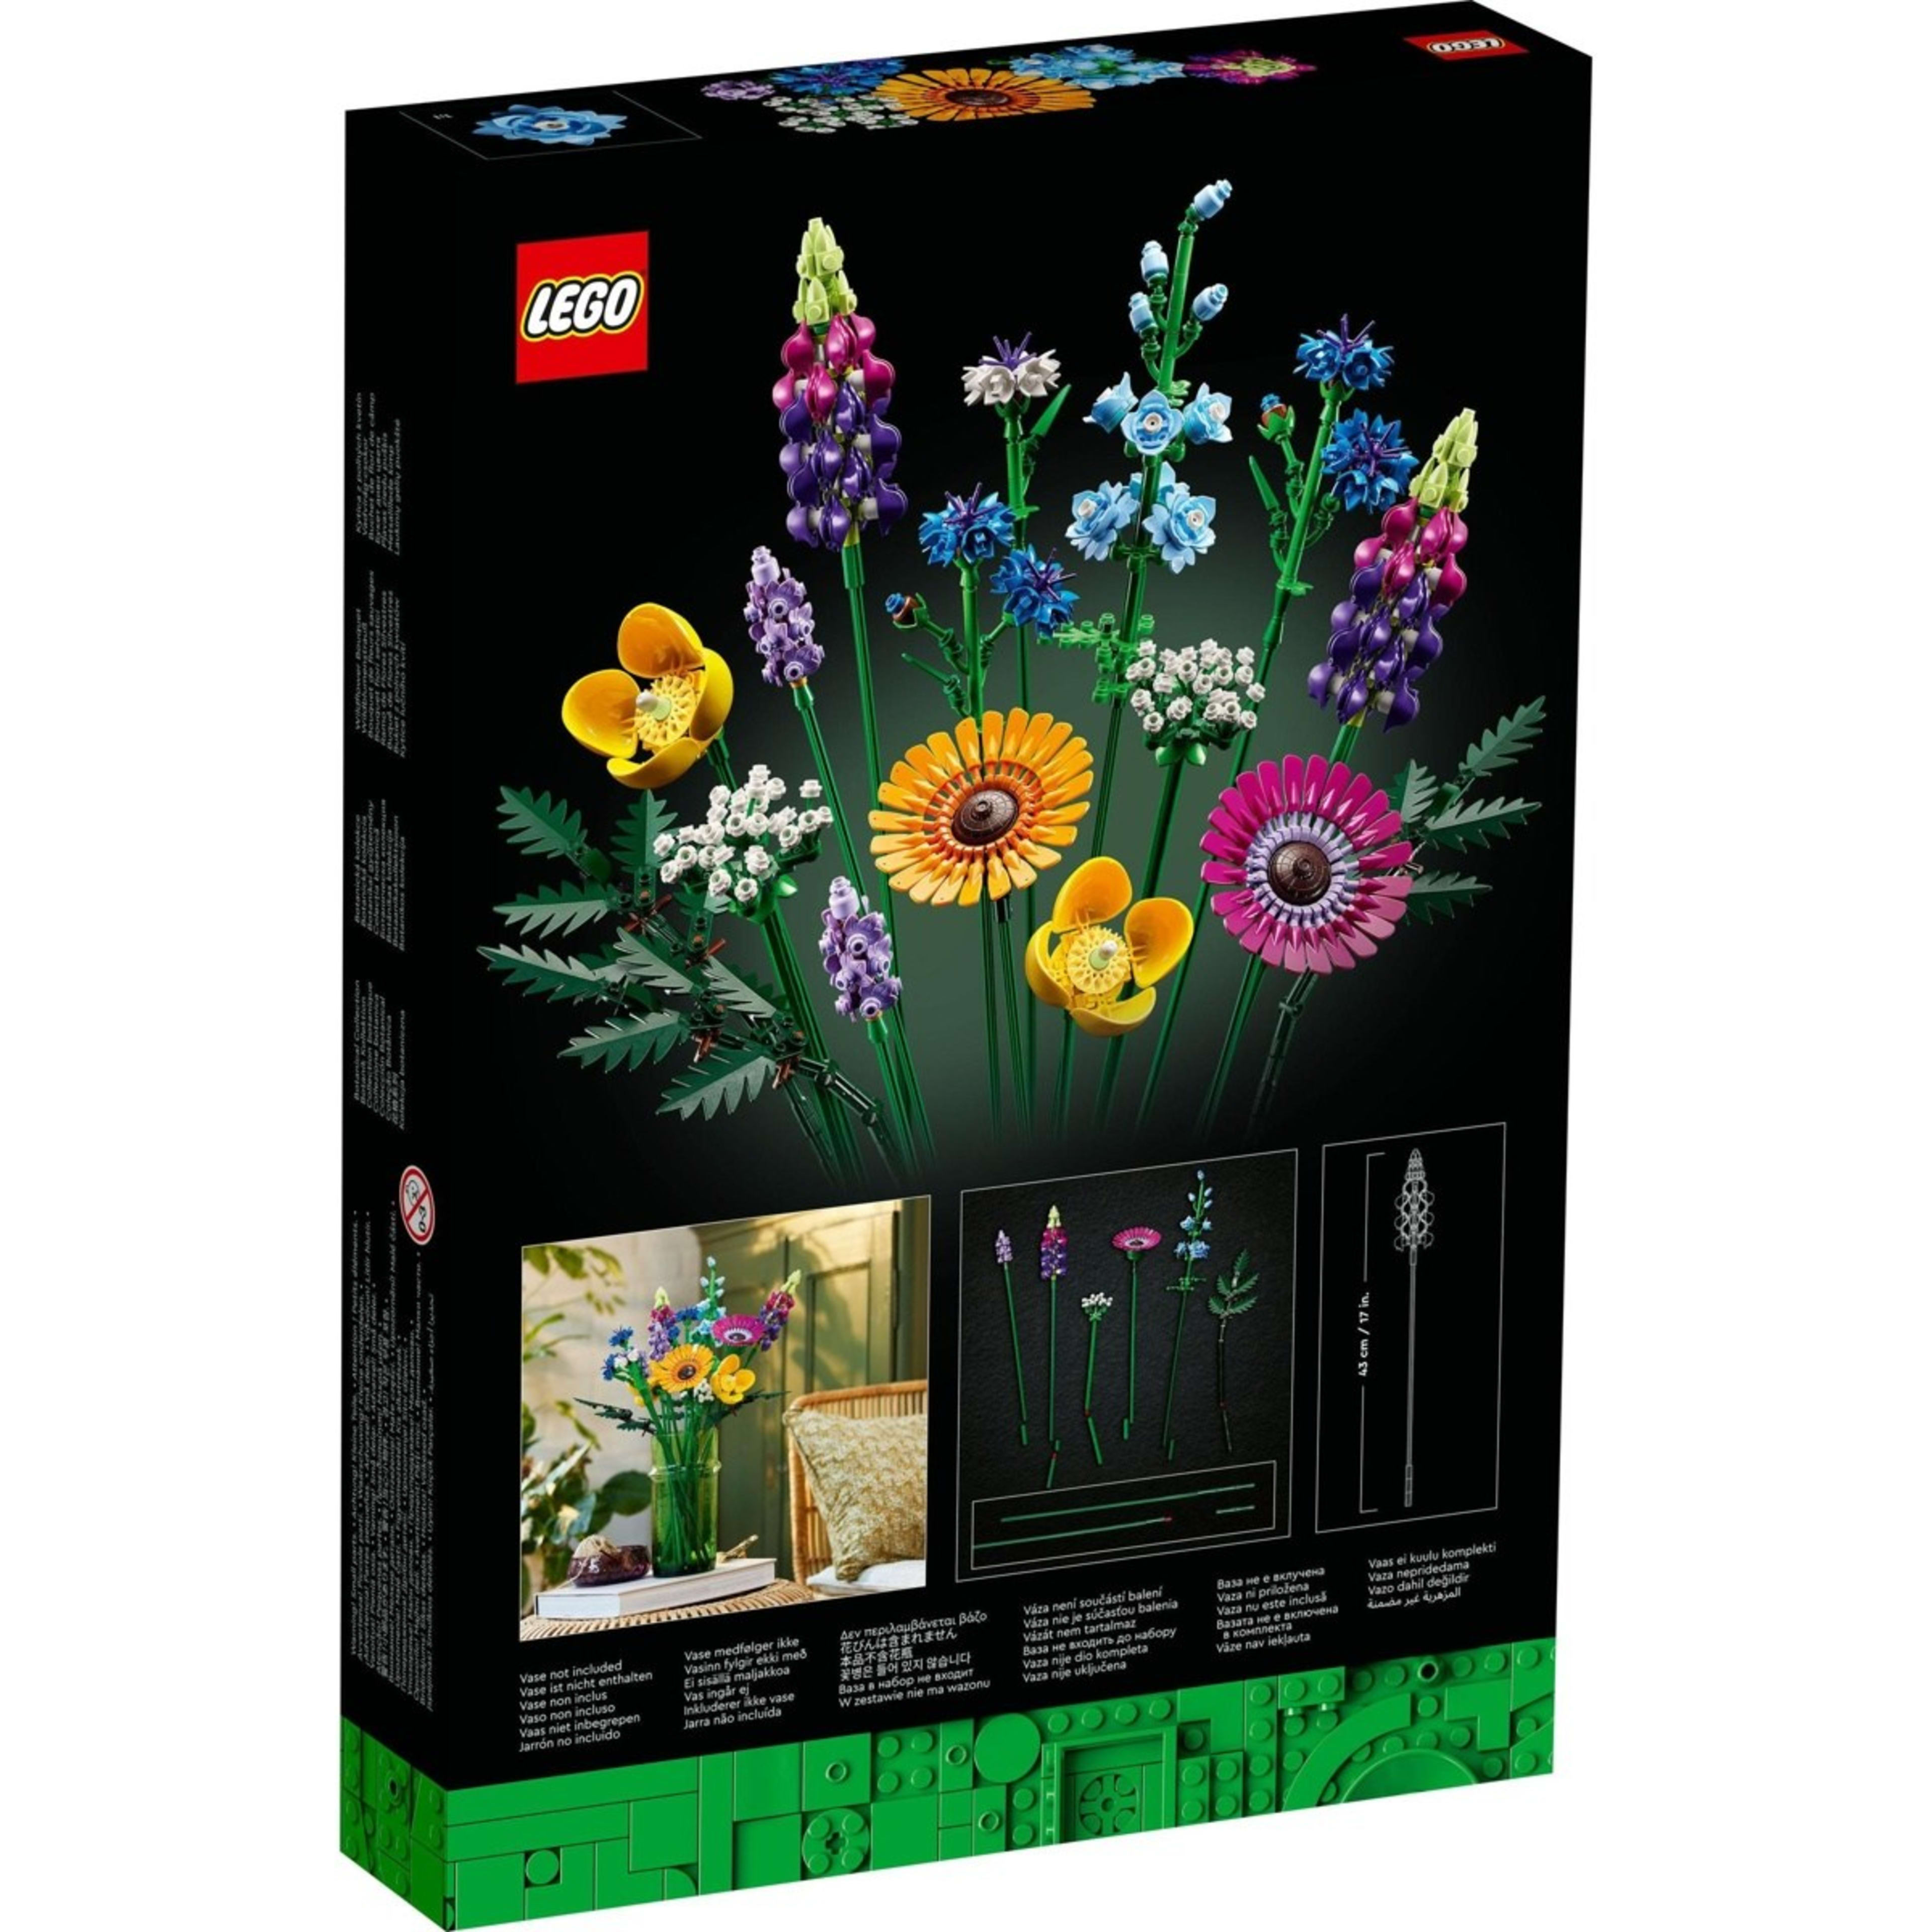 LEGO Icons Wildflower Bouquet 10313 - Kmart